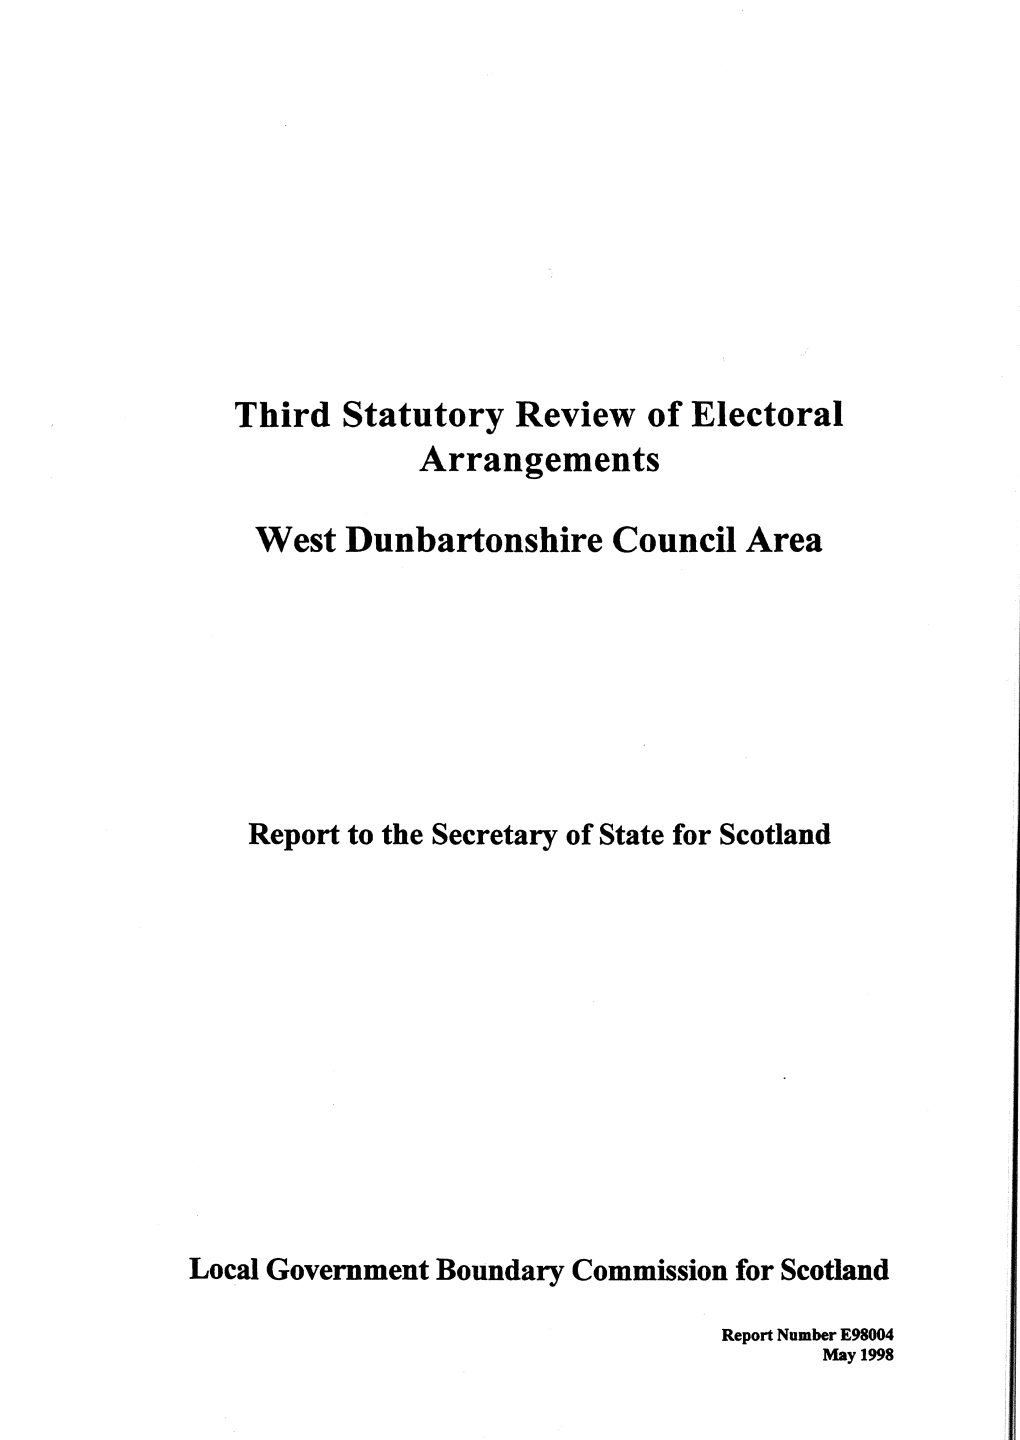 Third Statutory Review of Electoral Arrangements West Dunbartonshire Council Area